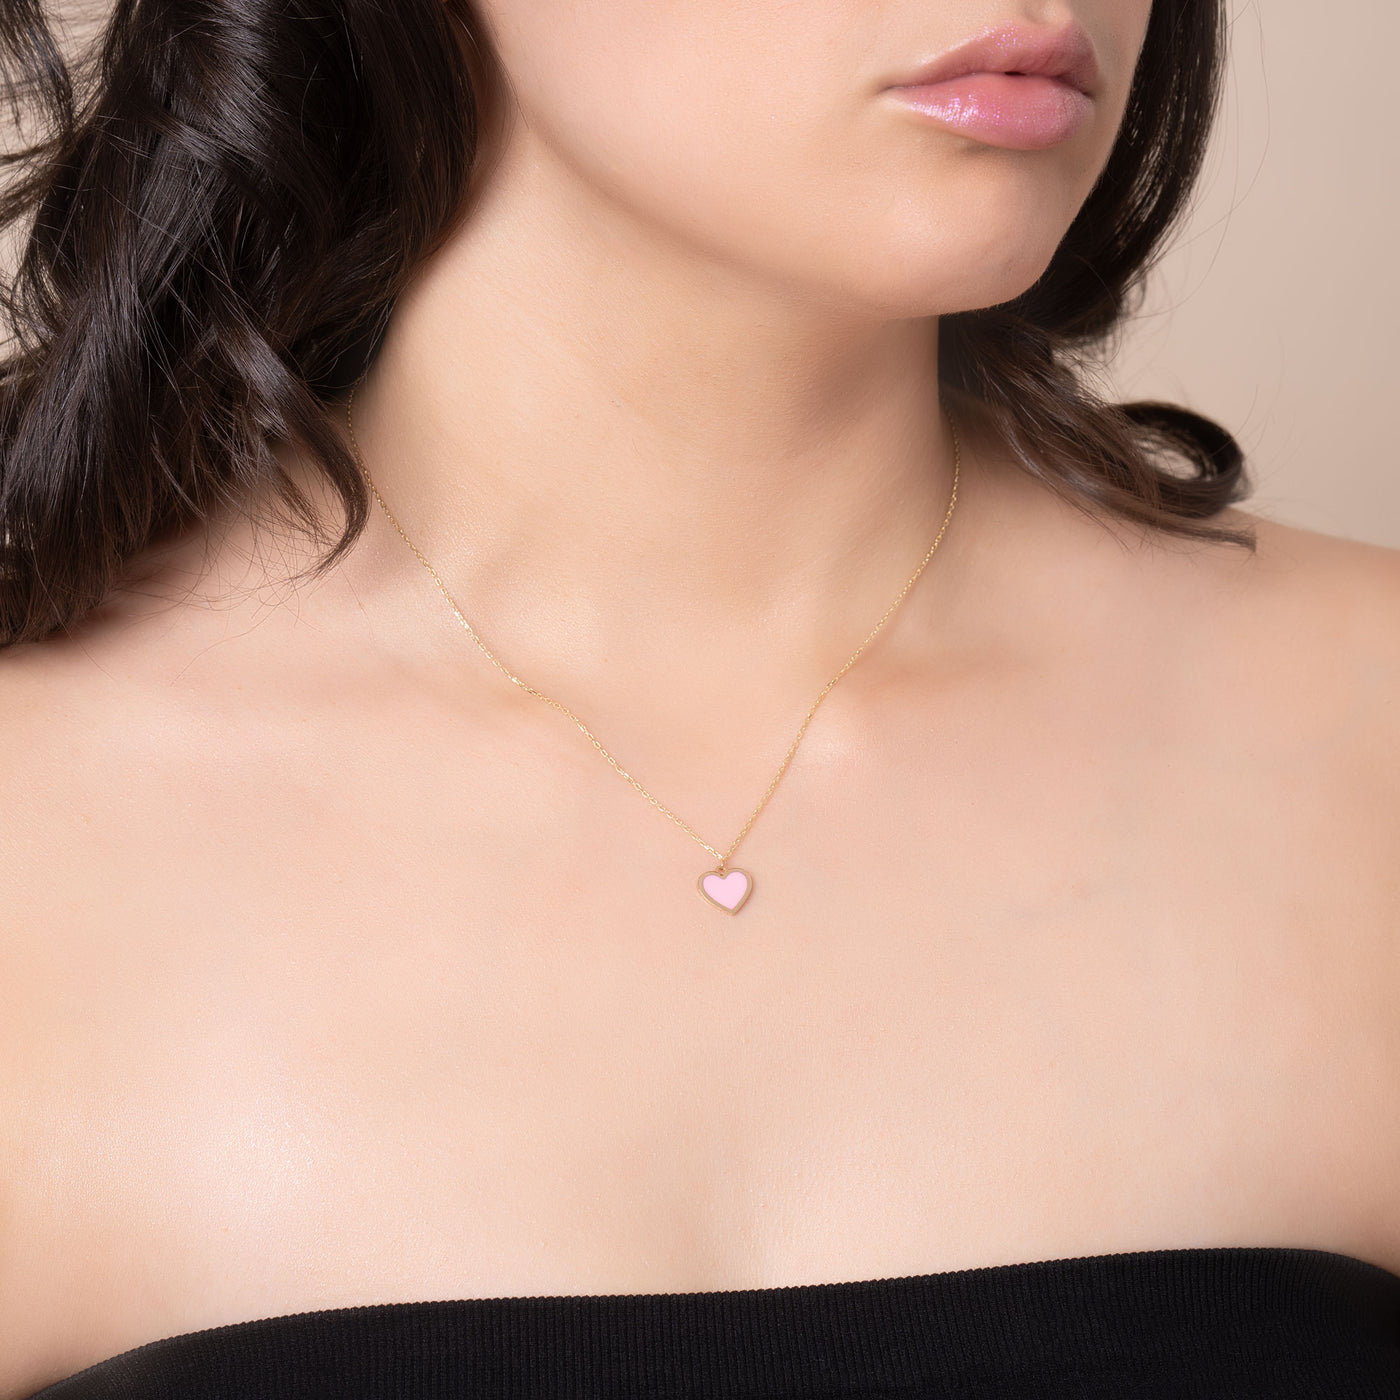 14K Gold Enamel Pink  Heart Necklace